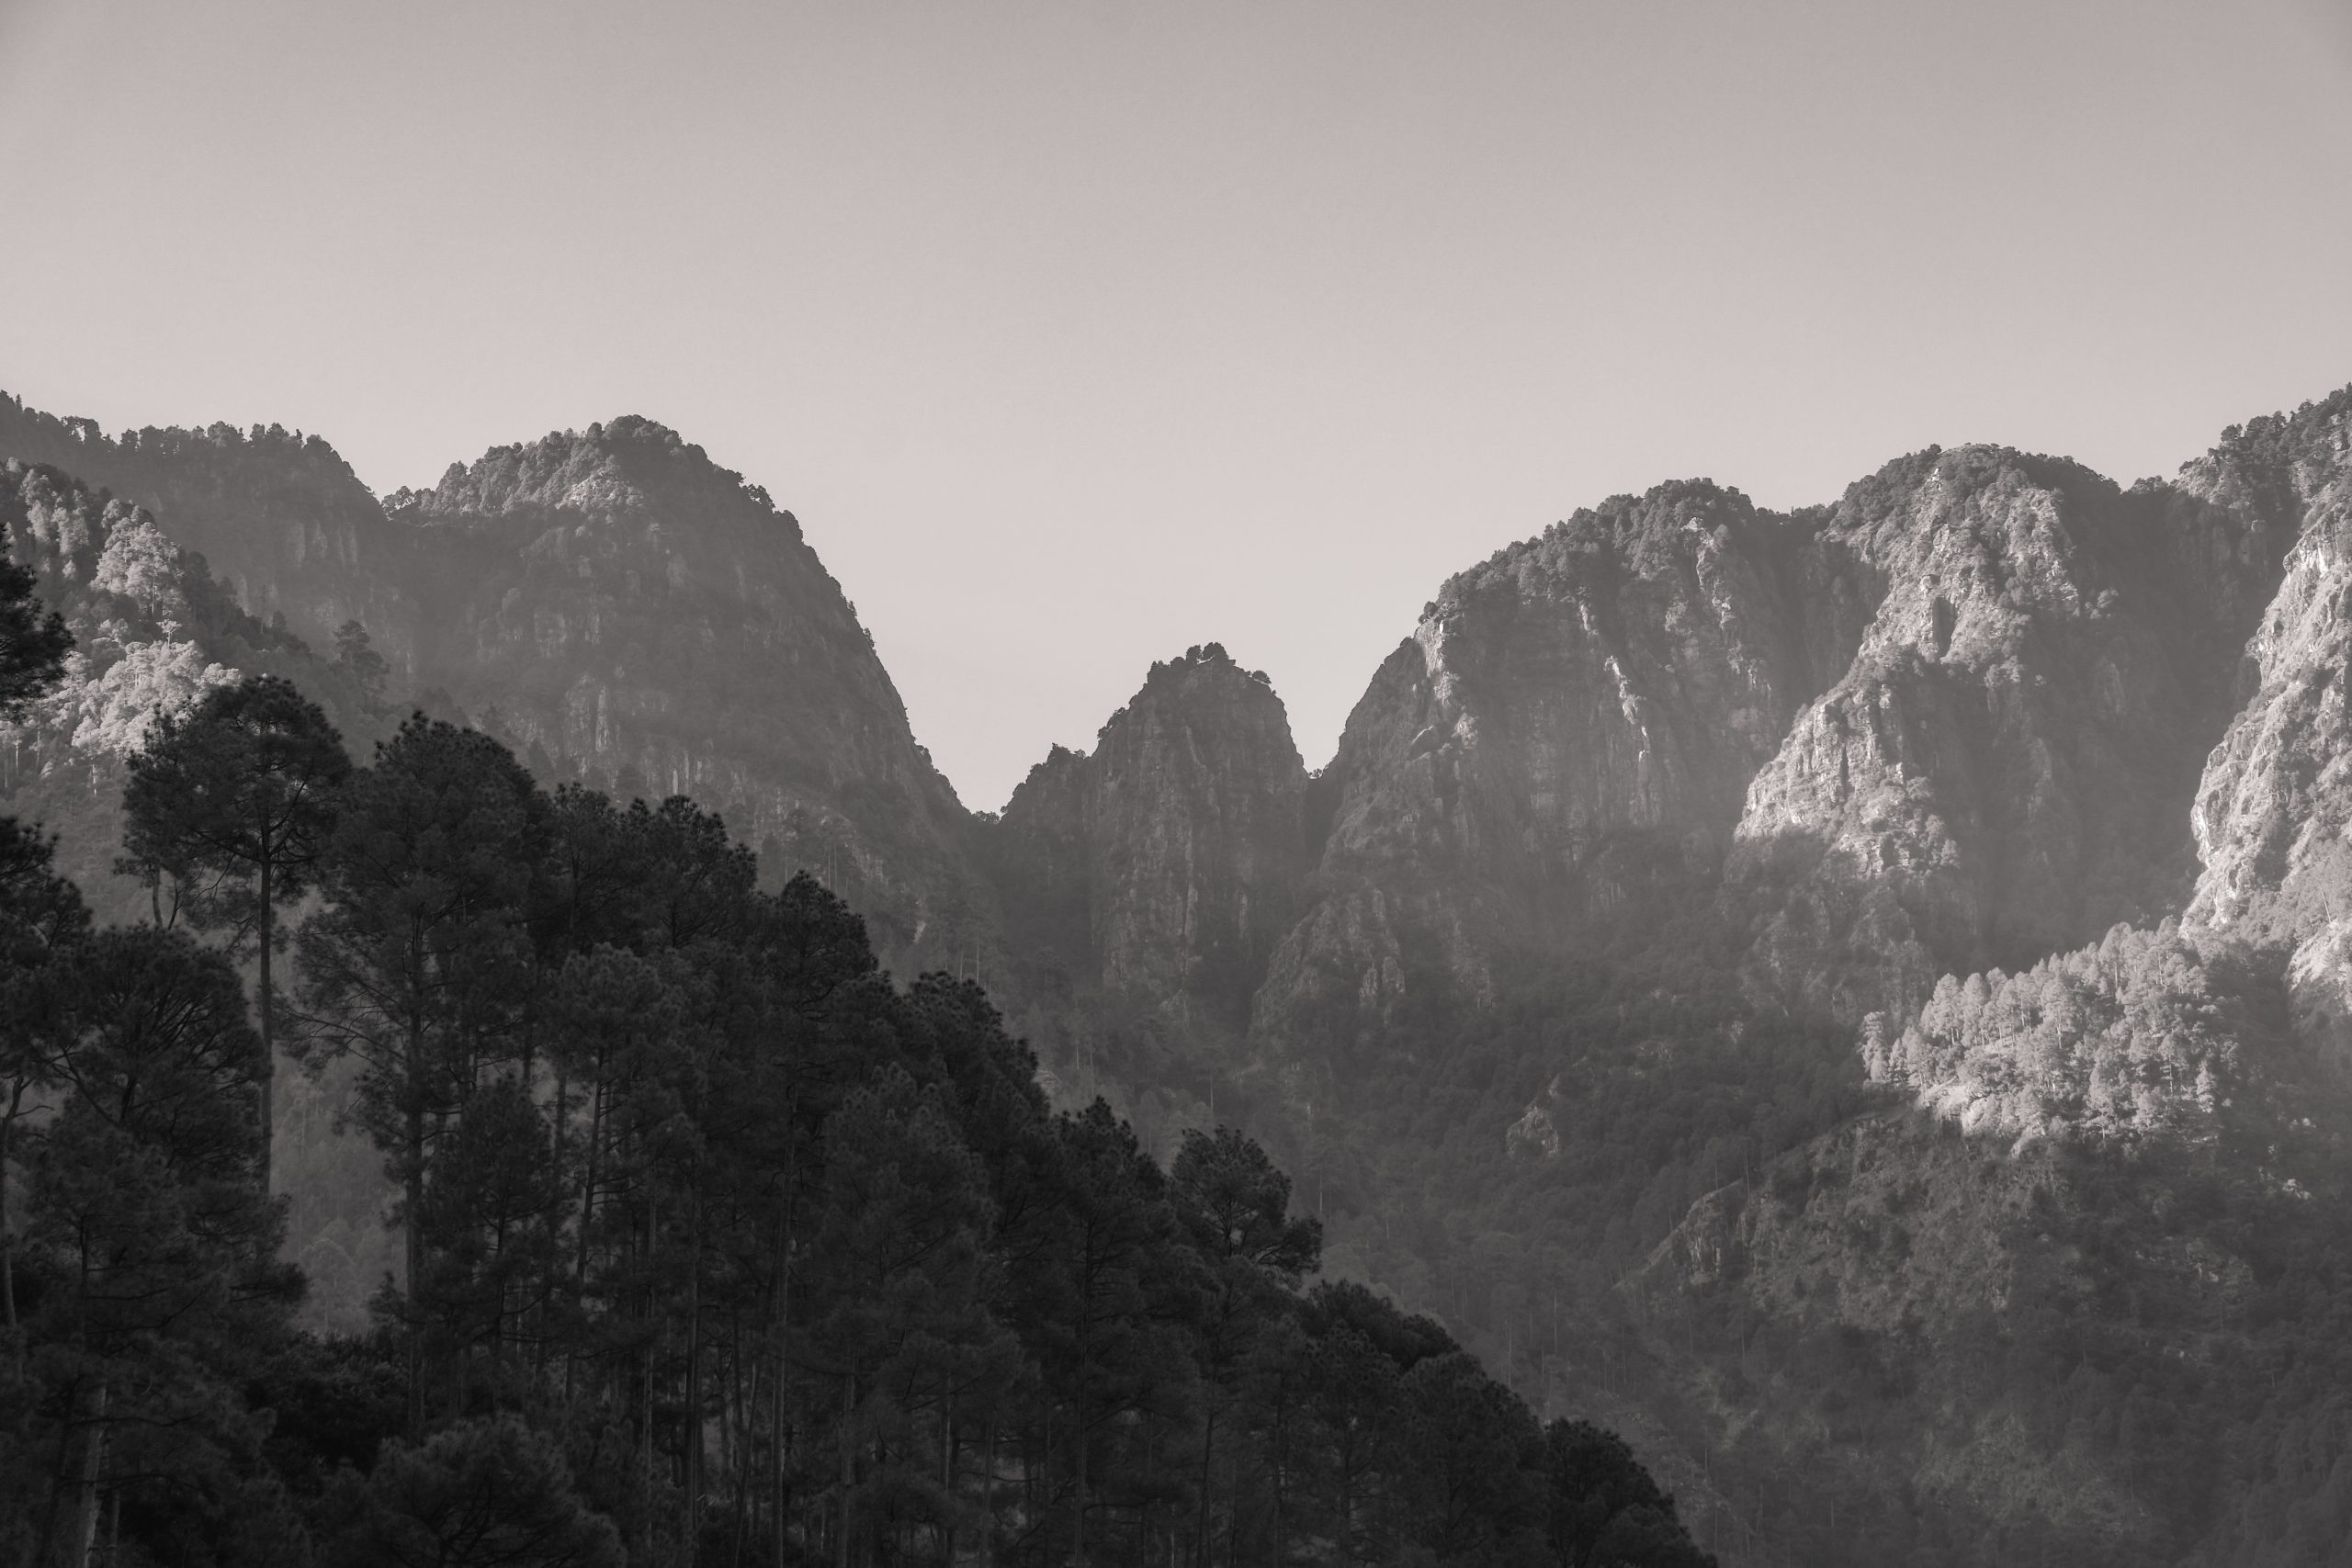 Peaks of a mountain range